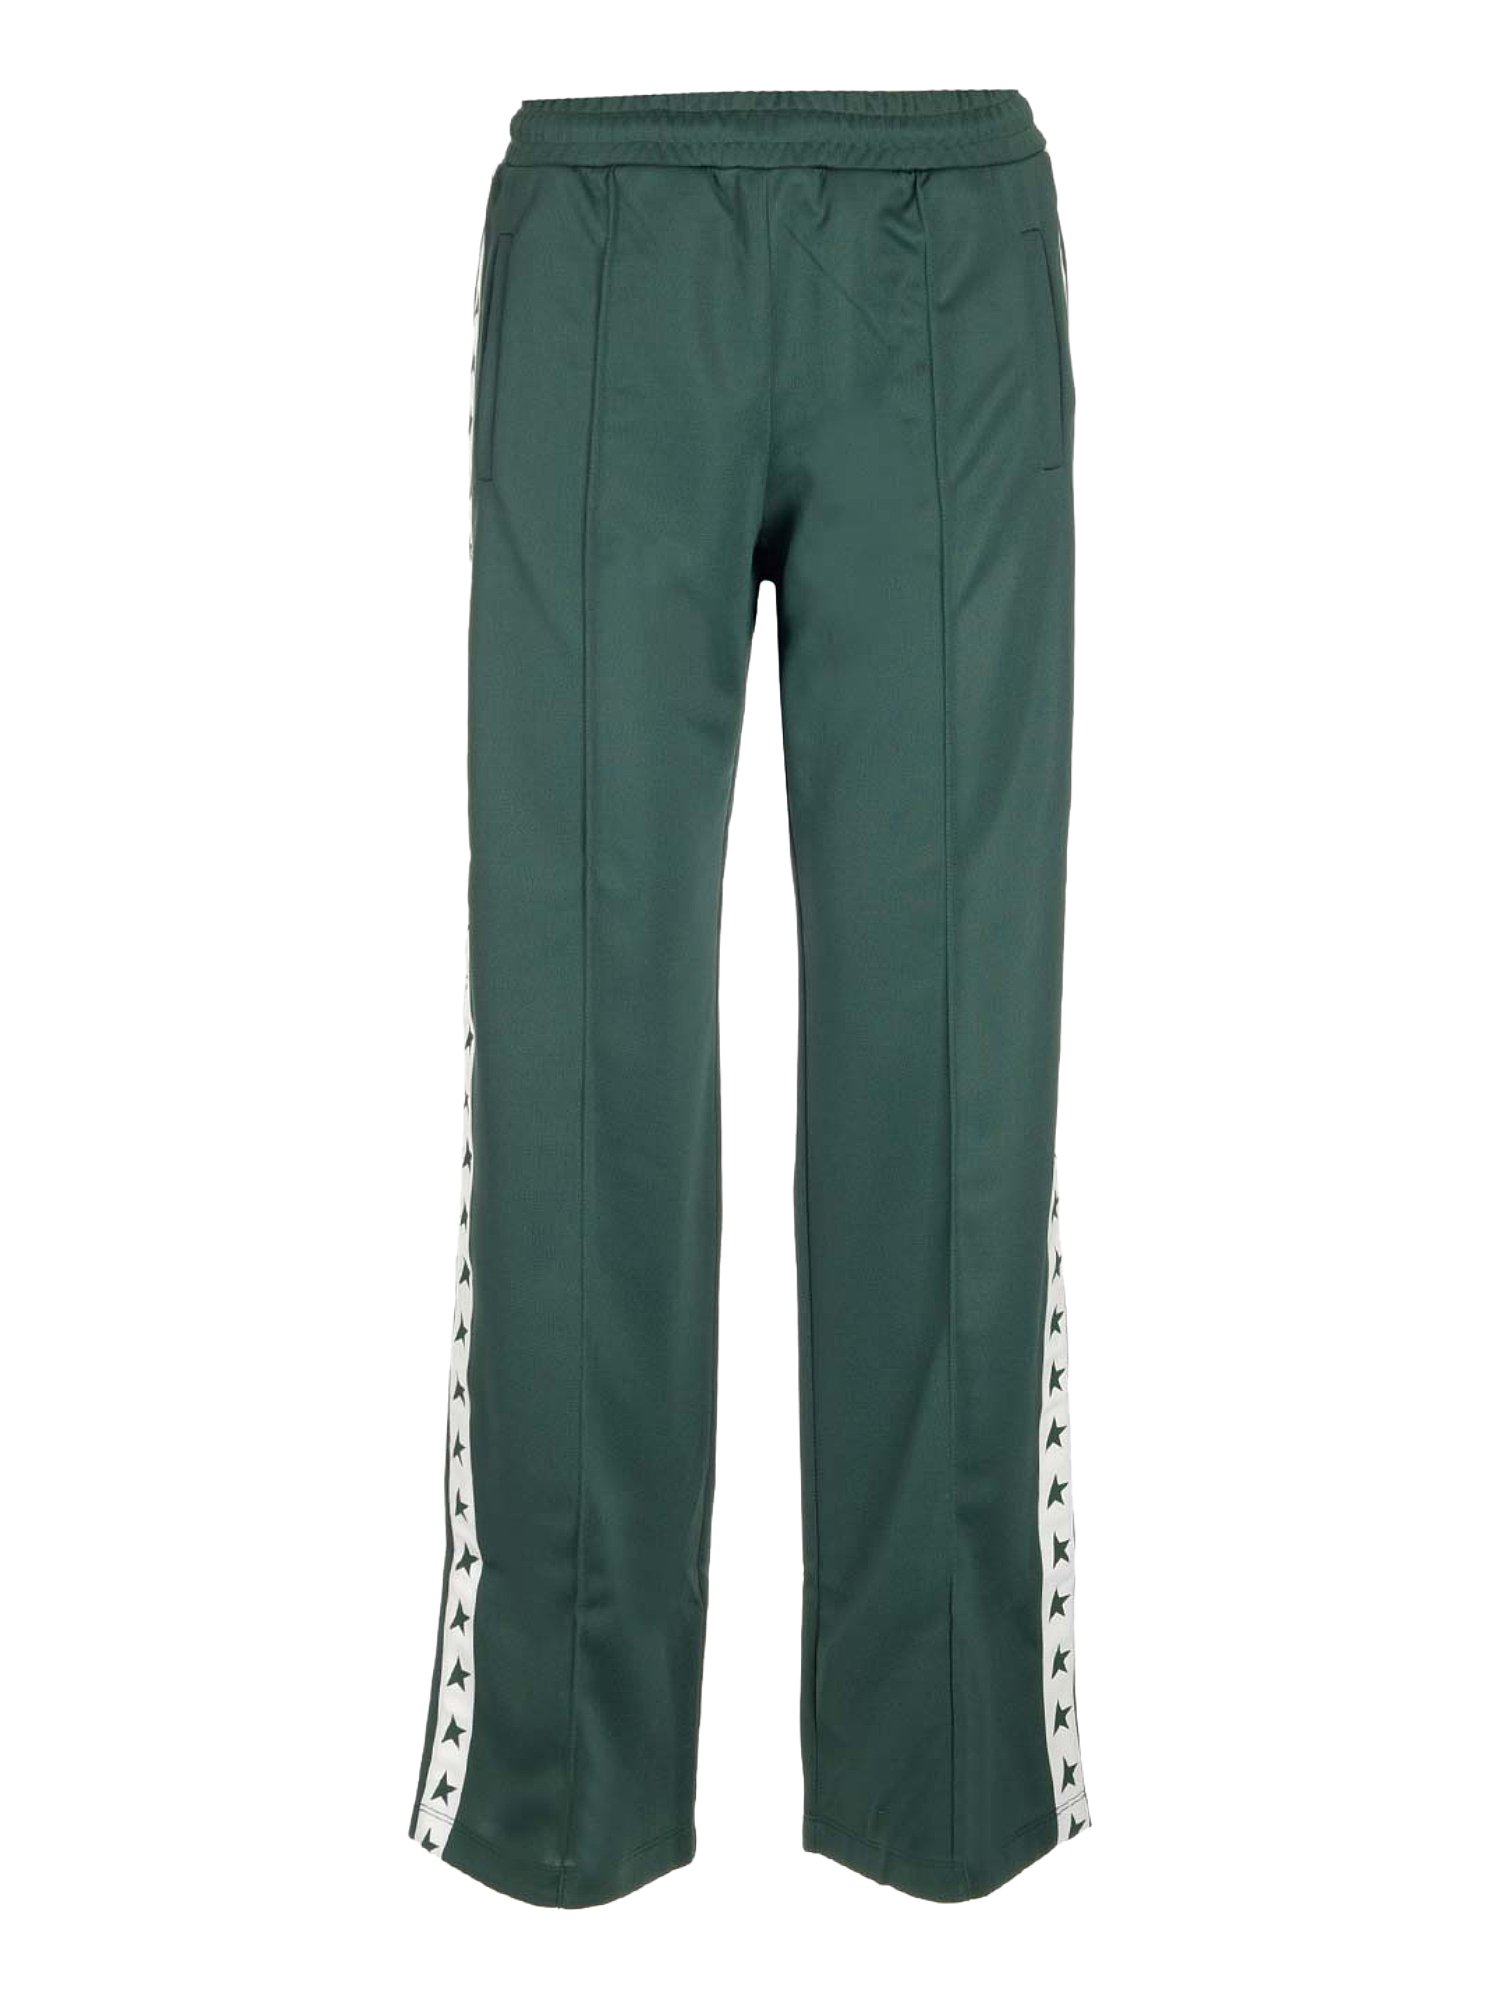 Pantalons Pour Femme - Golden Goose Deluxe Brand - En Synthetic Fibers Green - Taille:  -